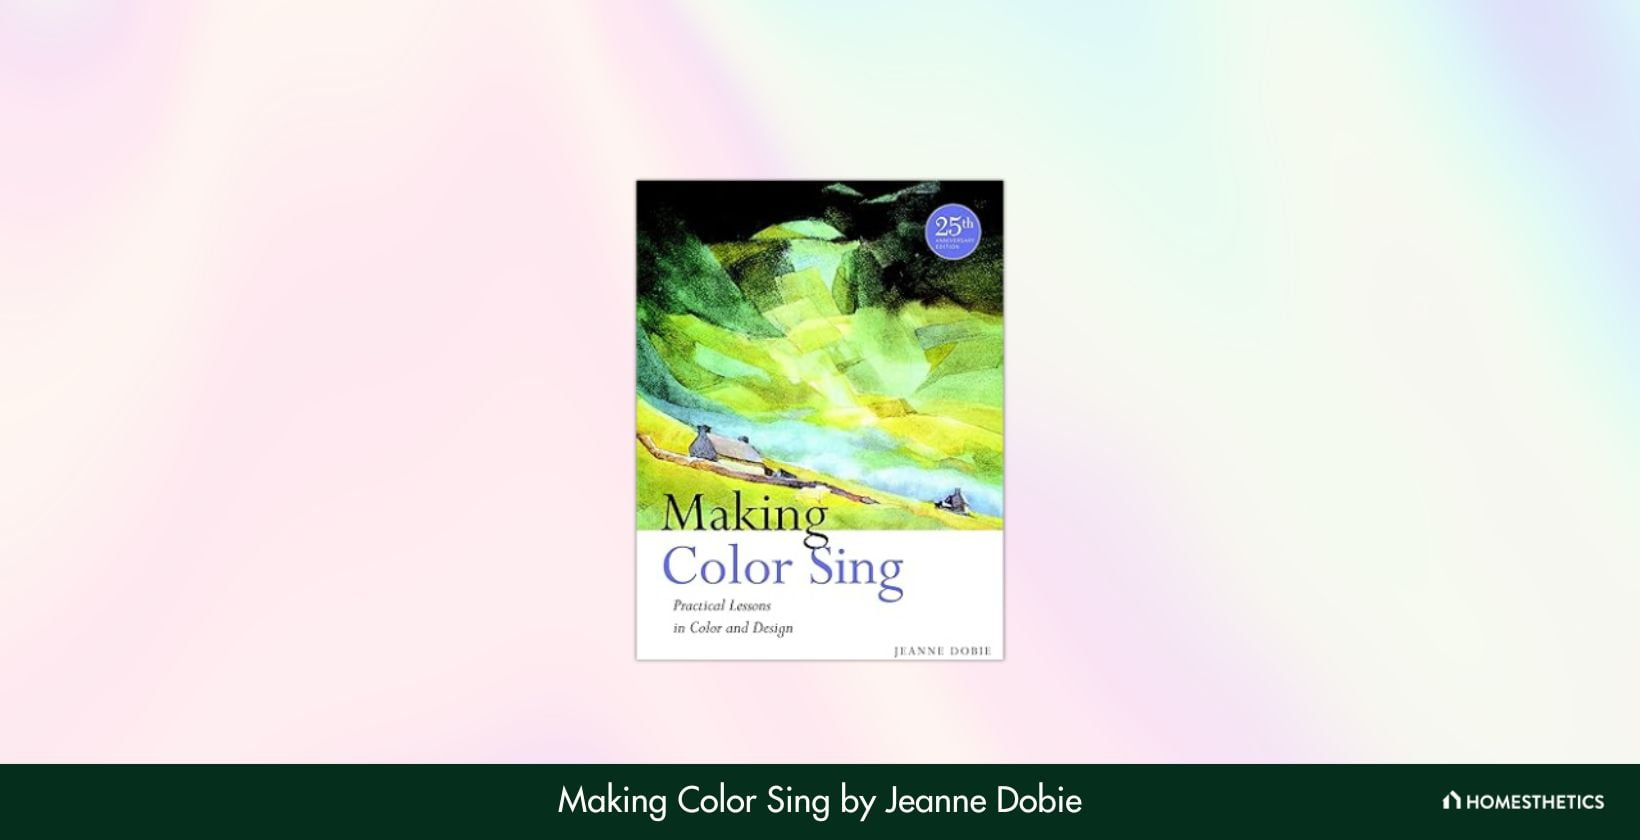 Making Color Sing by Jeanne Dobie